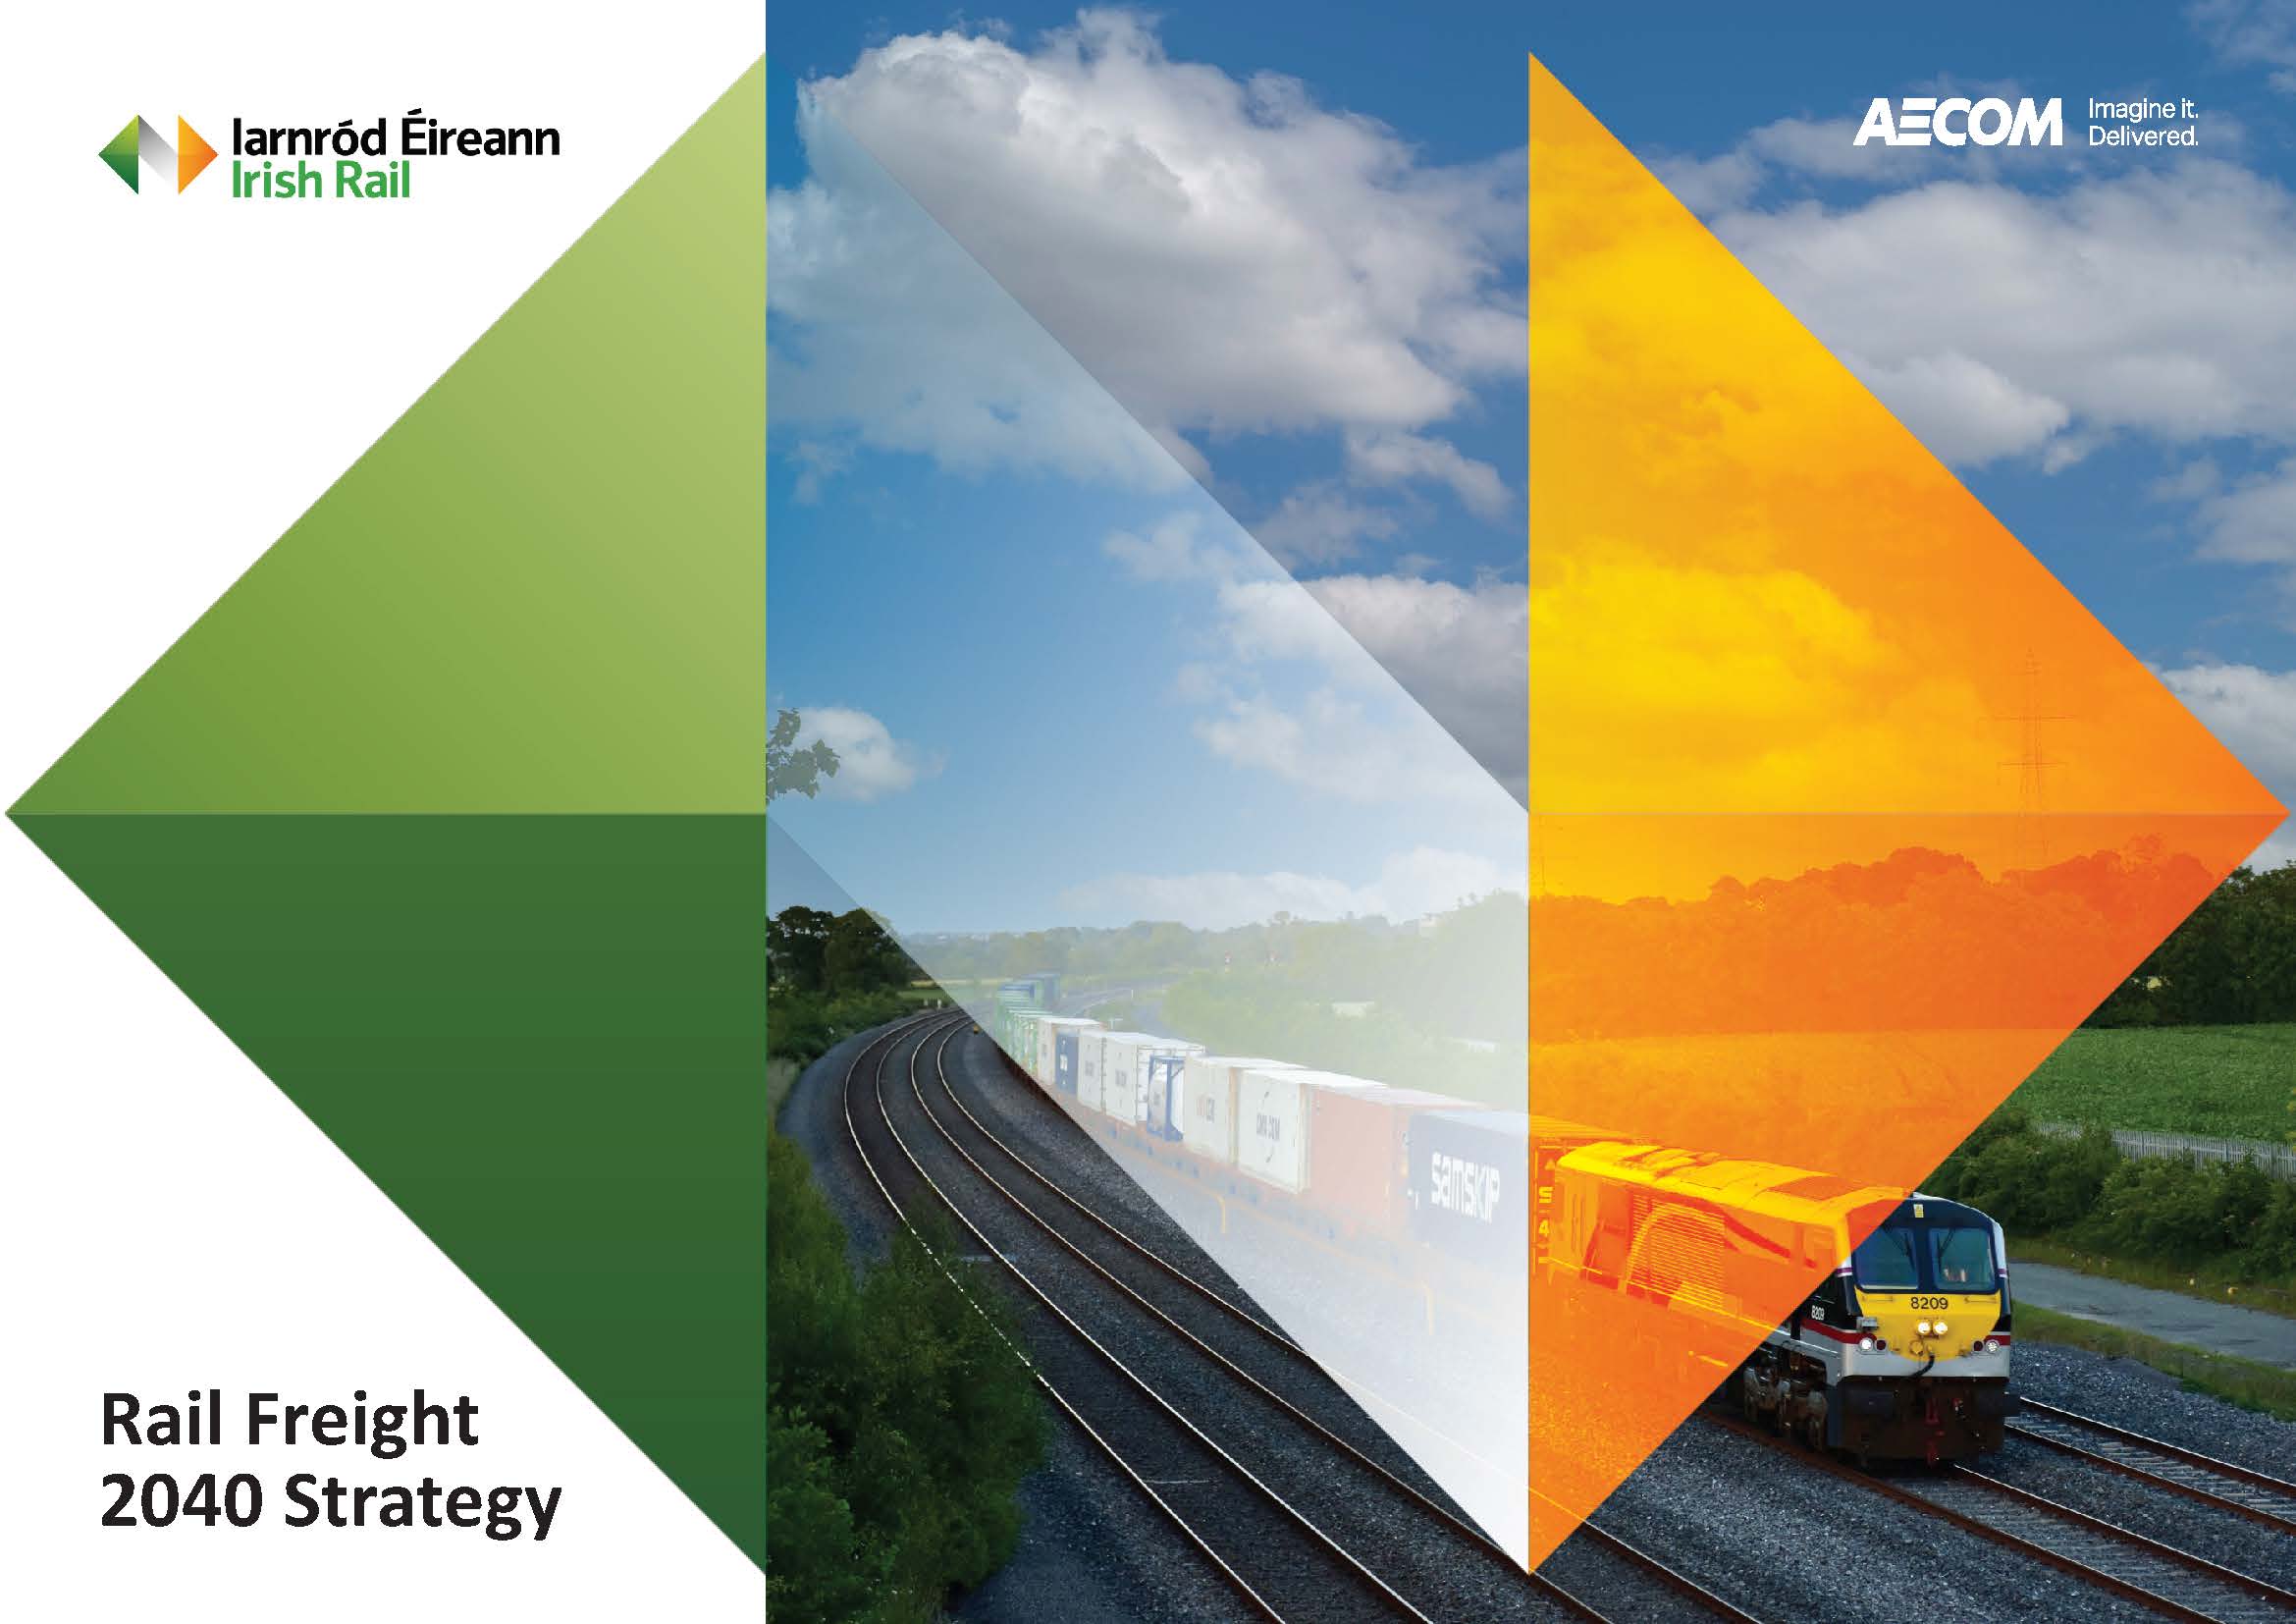 Rail Freight Strategy